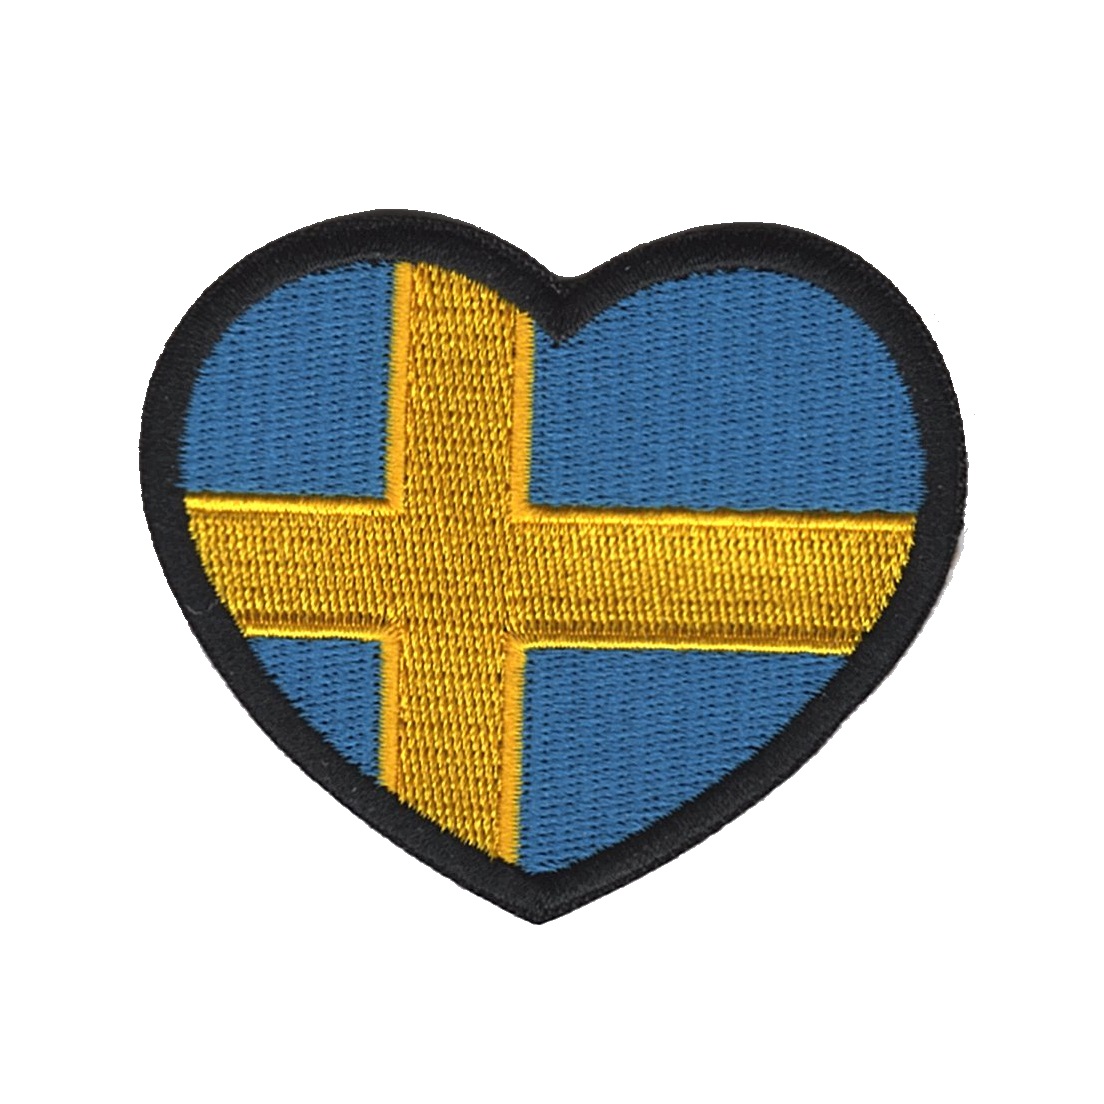 Hjärta Sverige